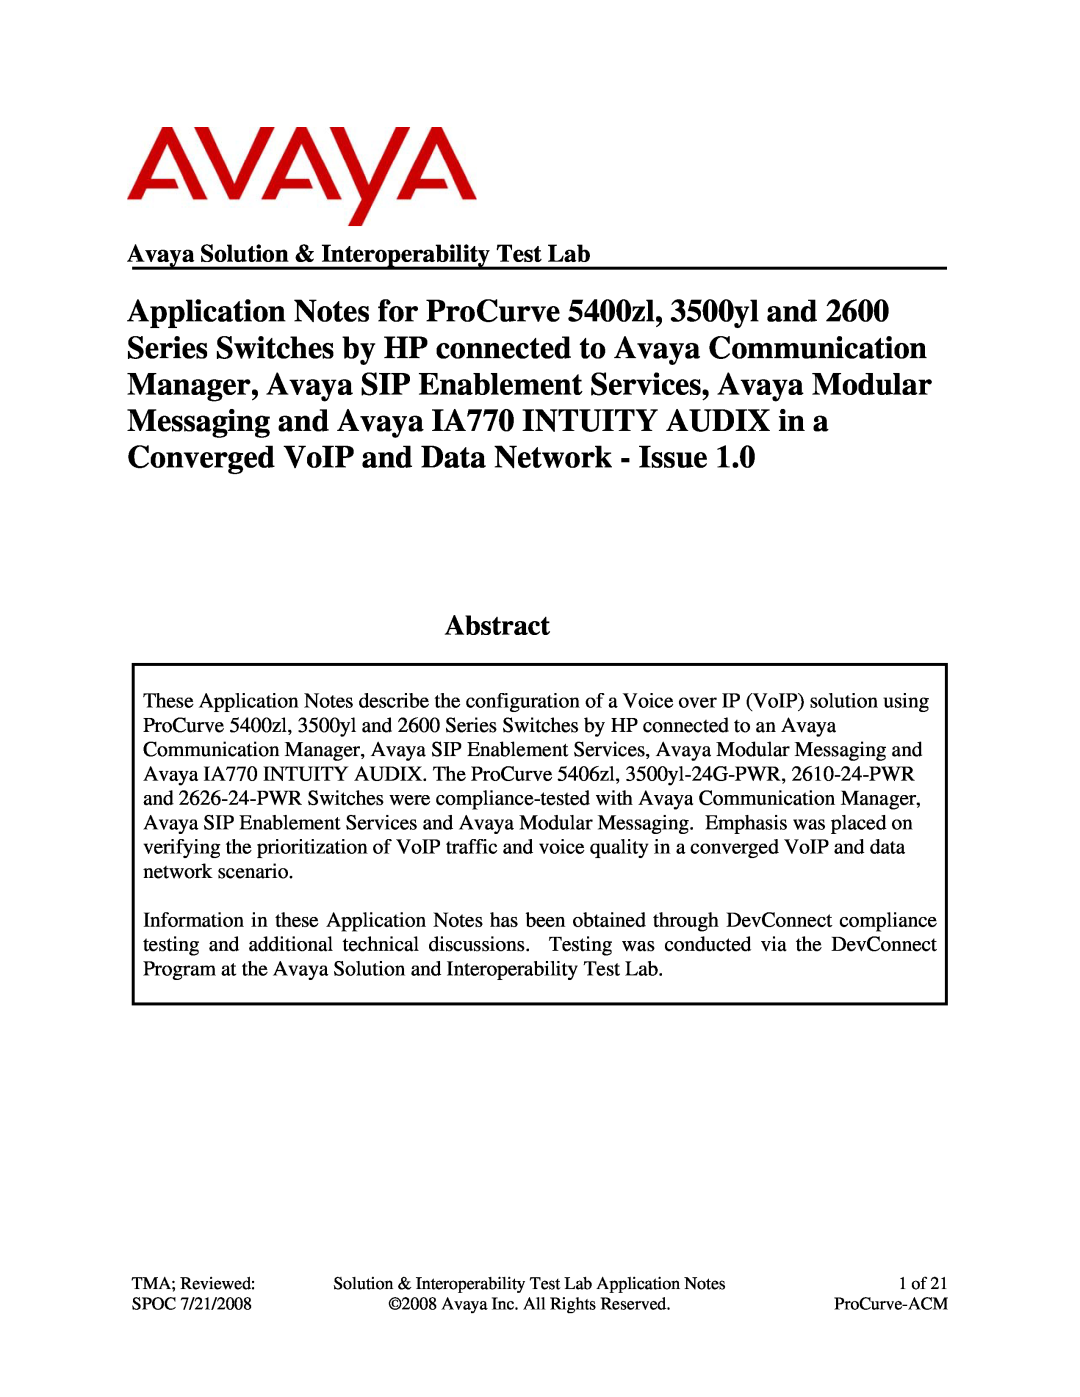 Avaya 5400ZL, 2600, 3500YL manual Abstract, Avaya Solution & Interoperability Test Lab 